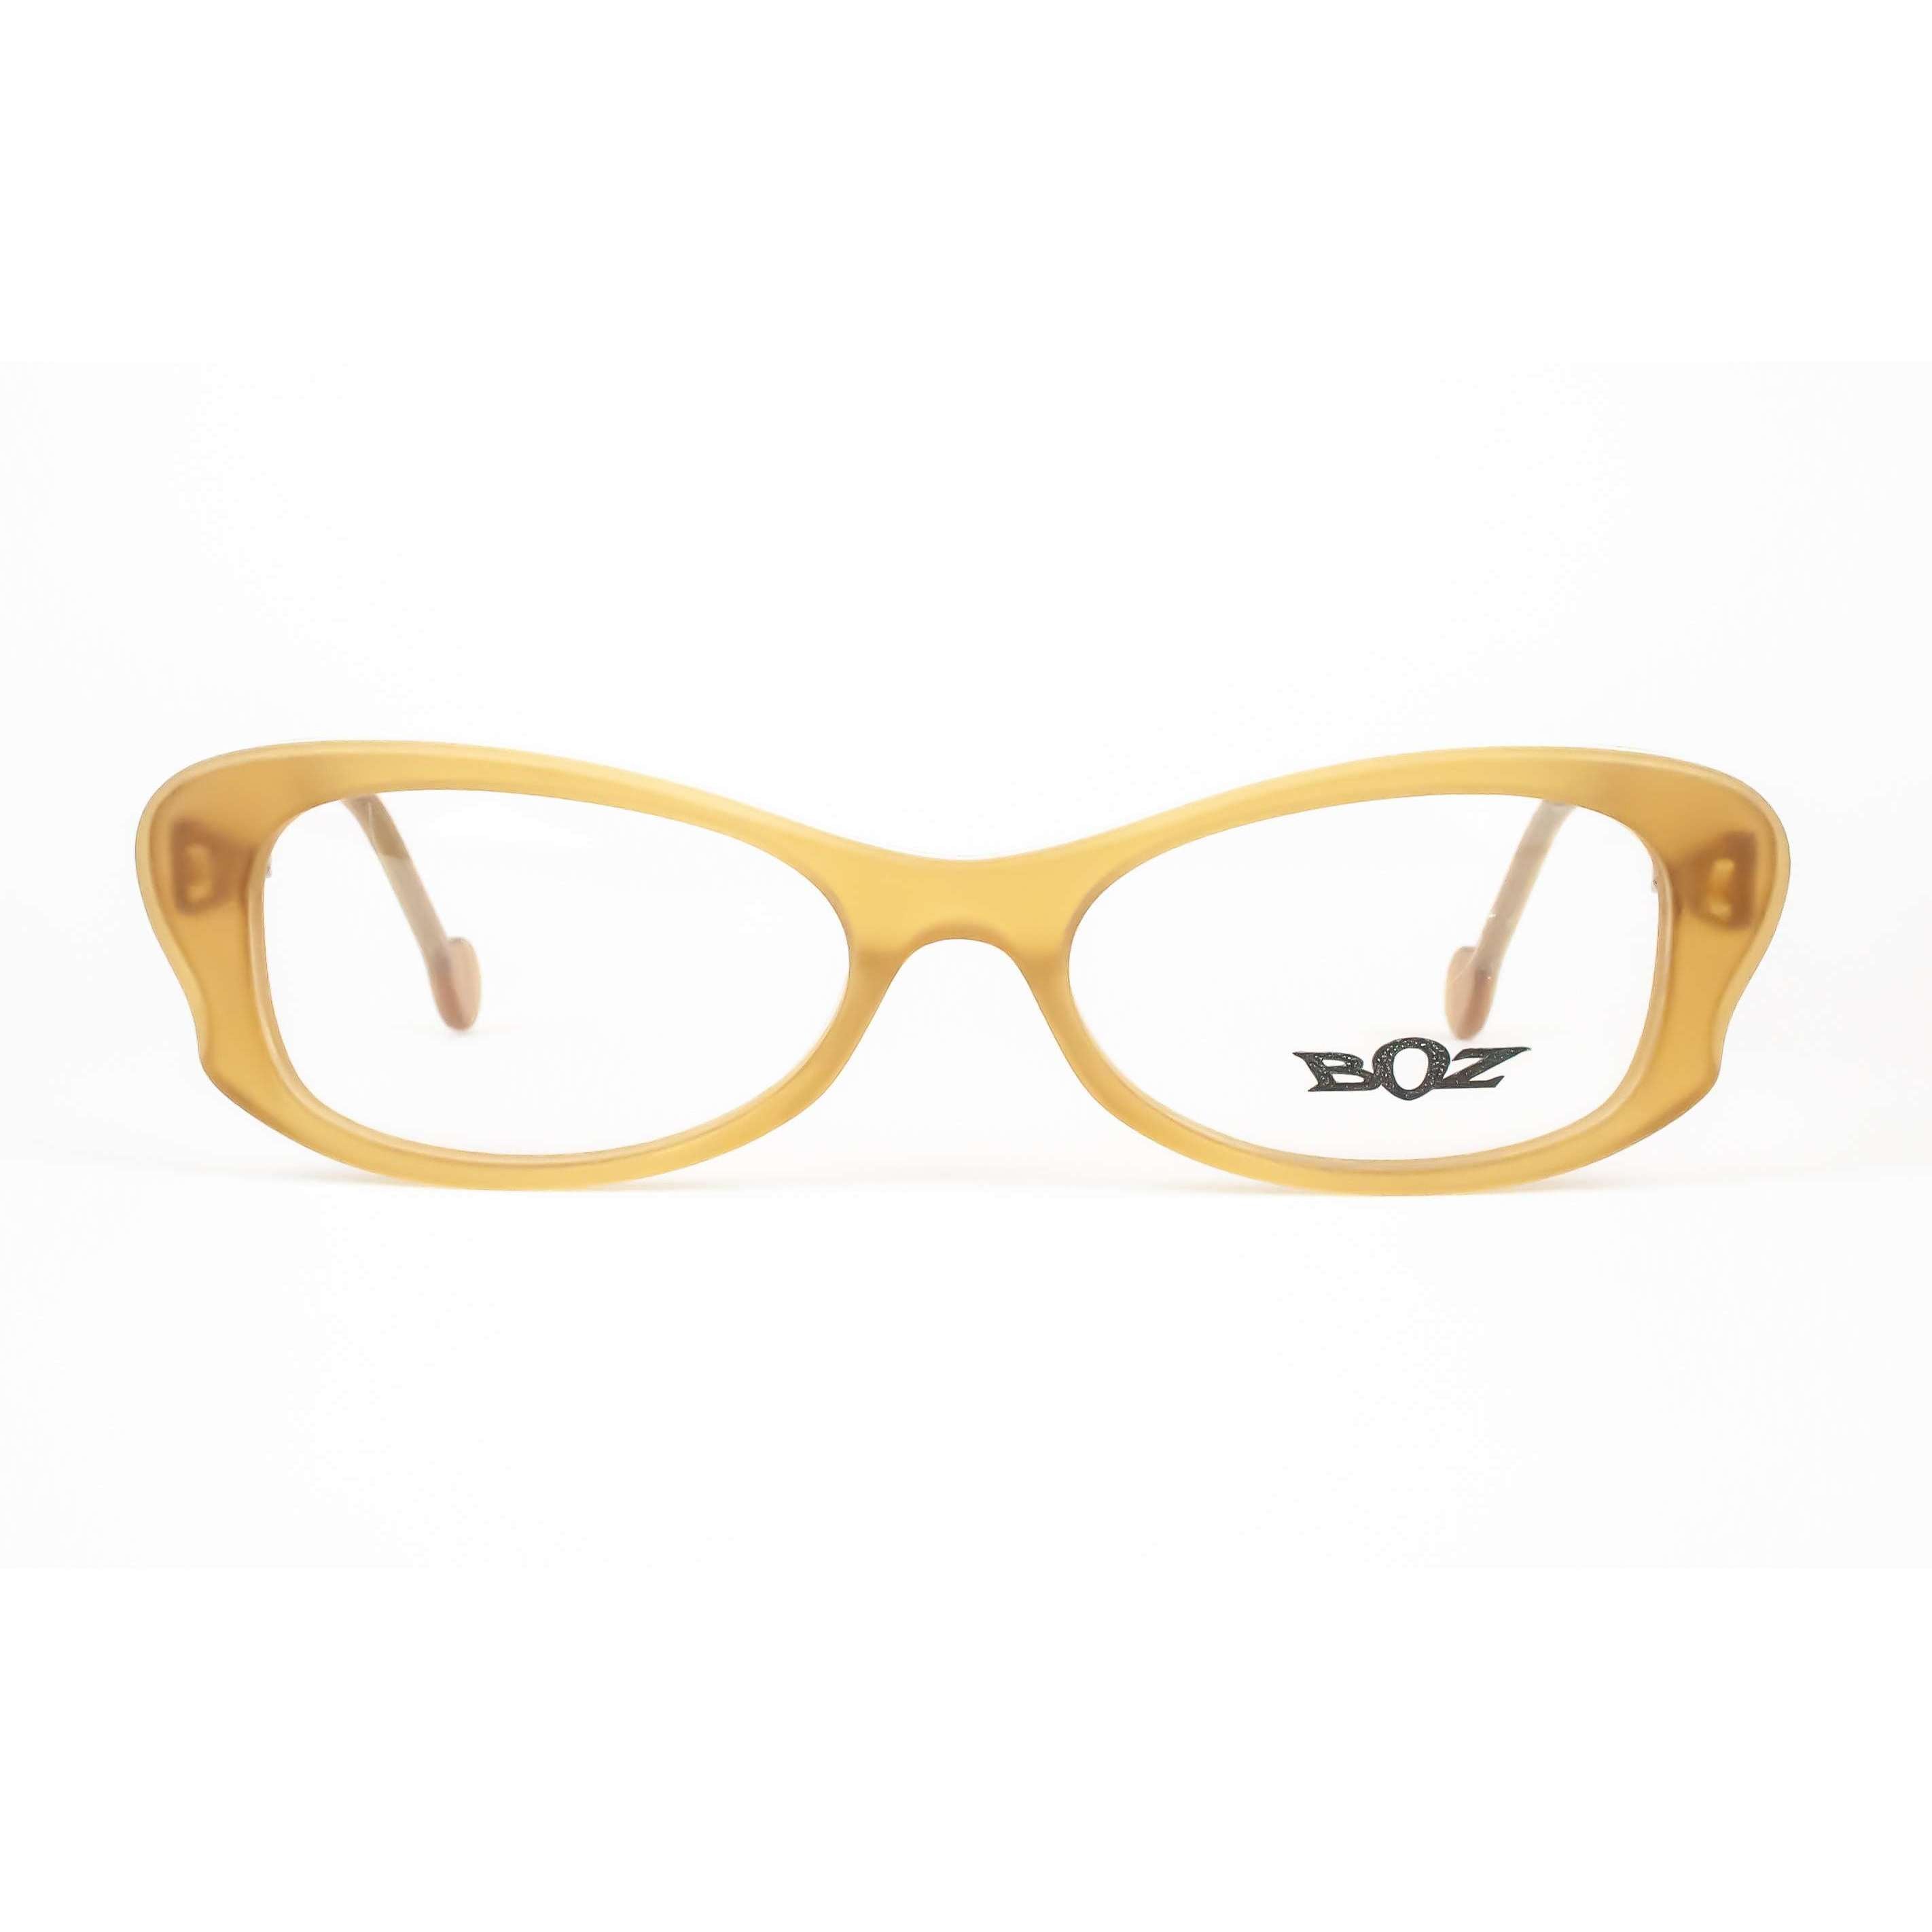 BOZ Sophie Honey Yellow Oval Glasses